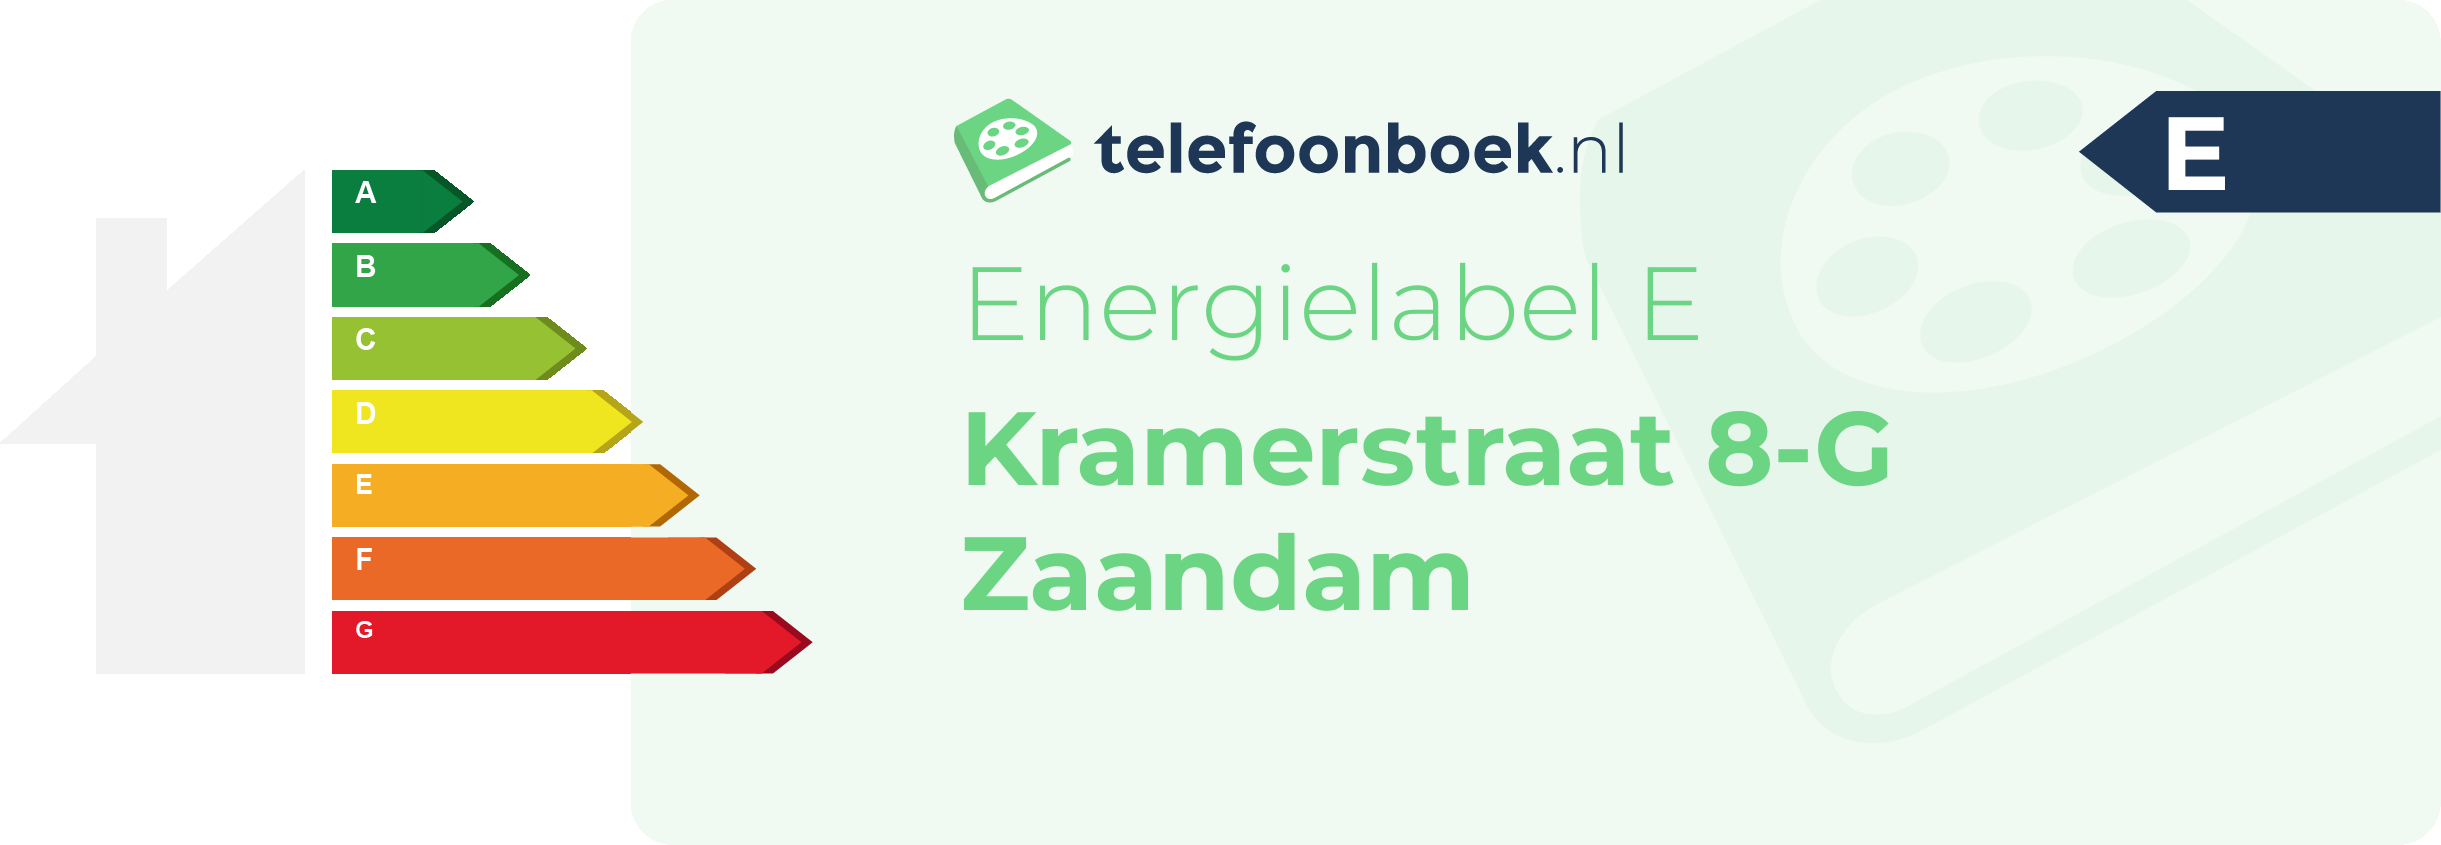 Energielabel Kramerstraat 8-G Zaandam